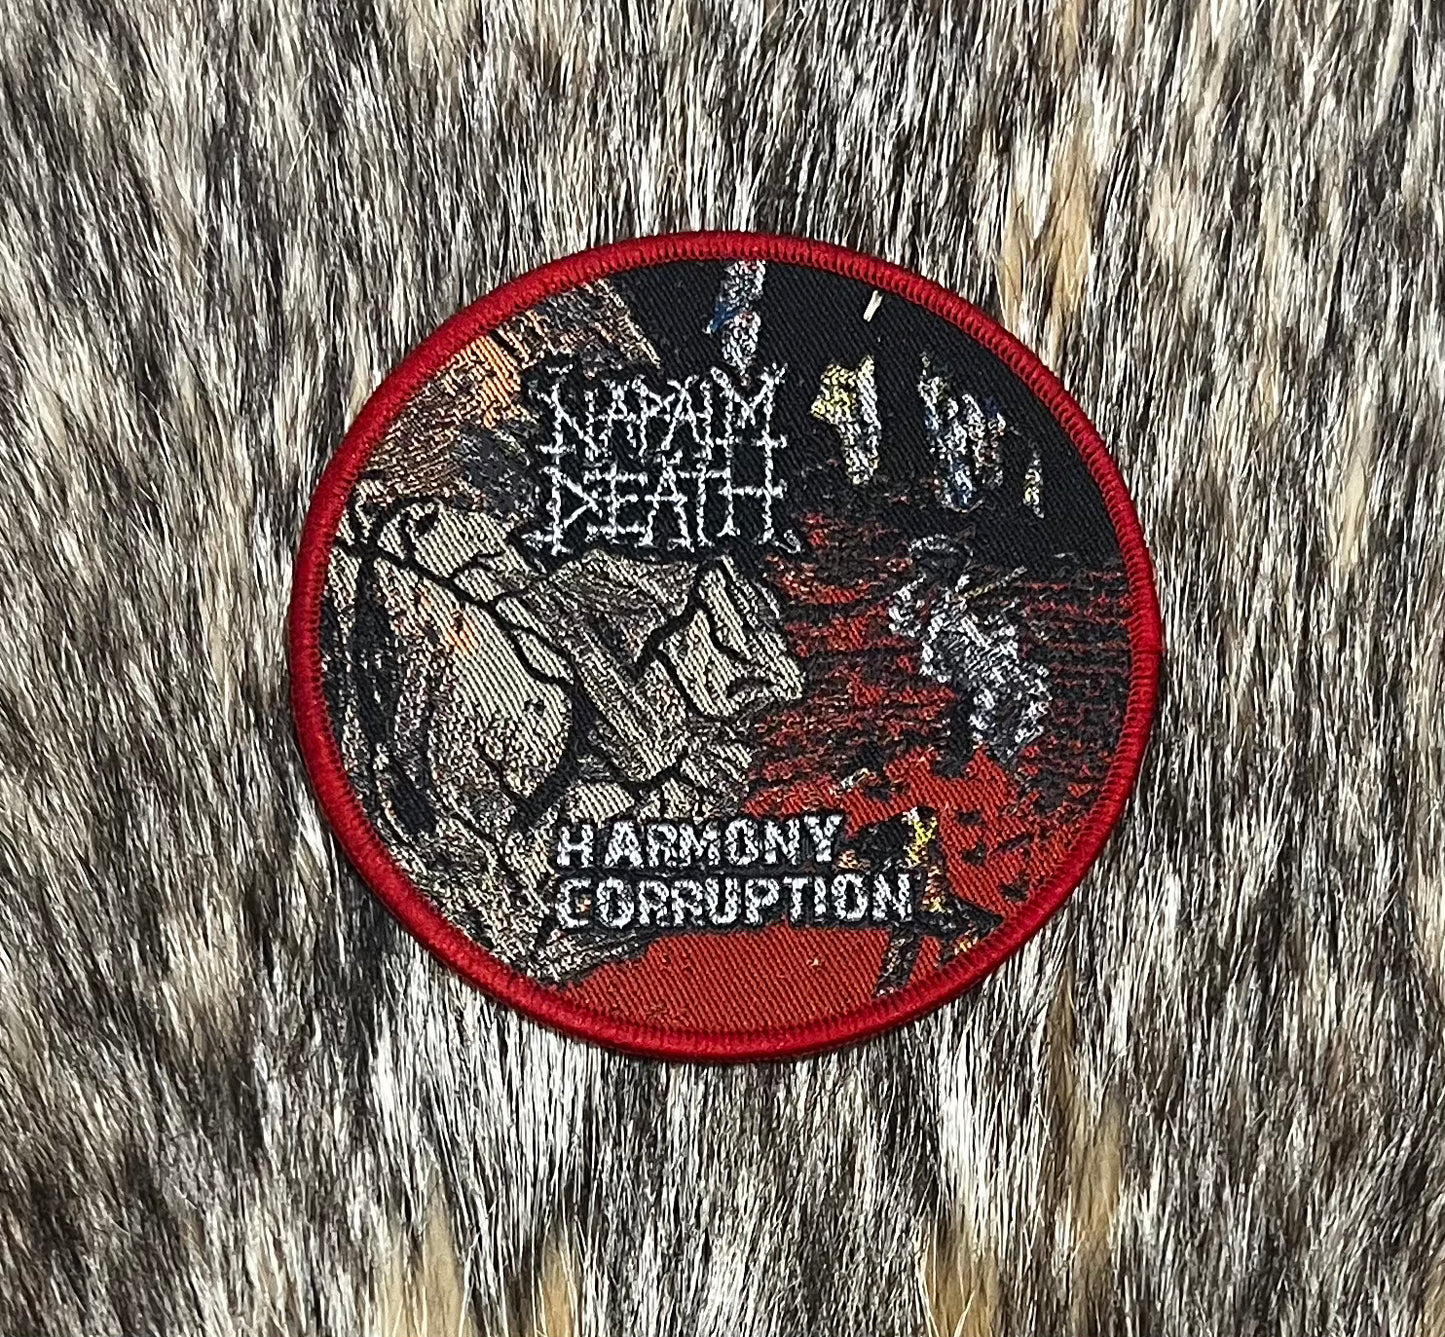 Napalm Death - Harmony Corruption Patch